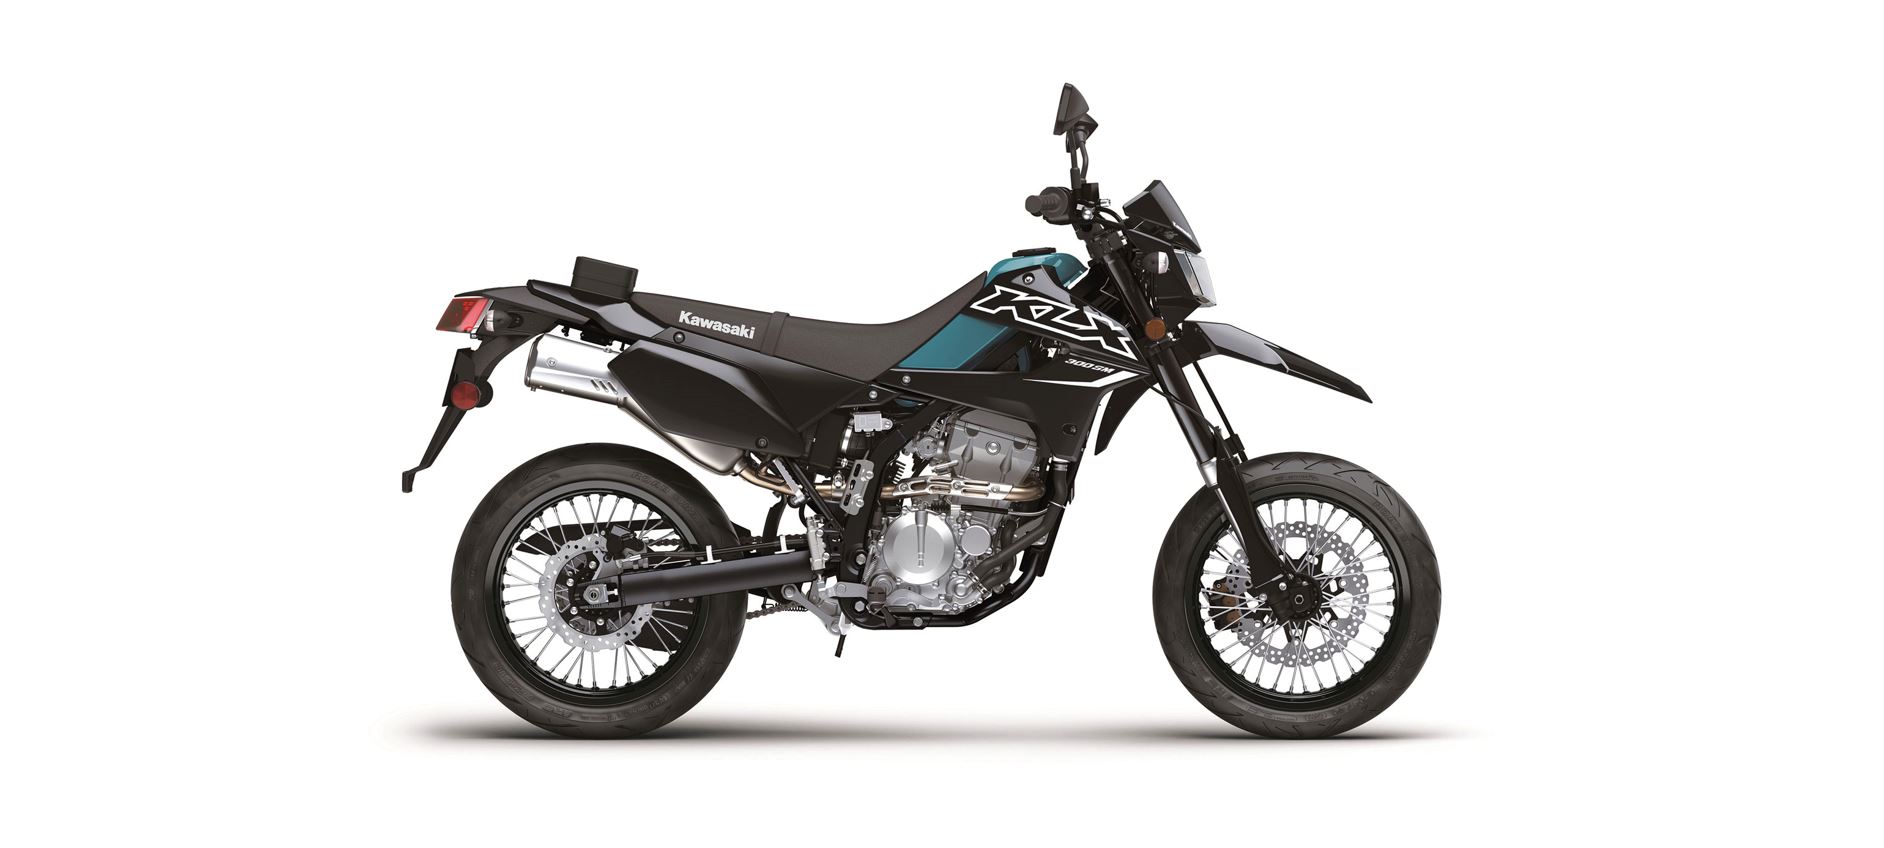 2022 Kawasaki KLX300 KLX300SM feature